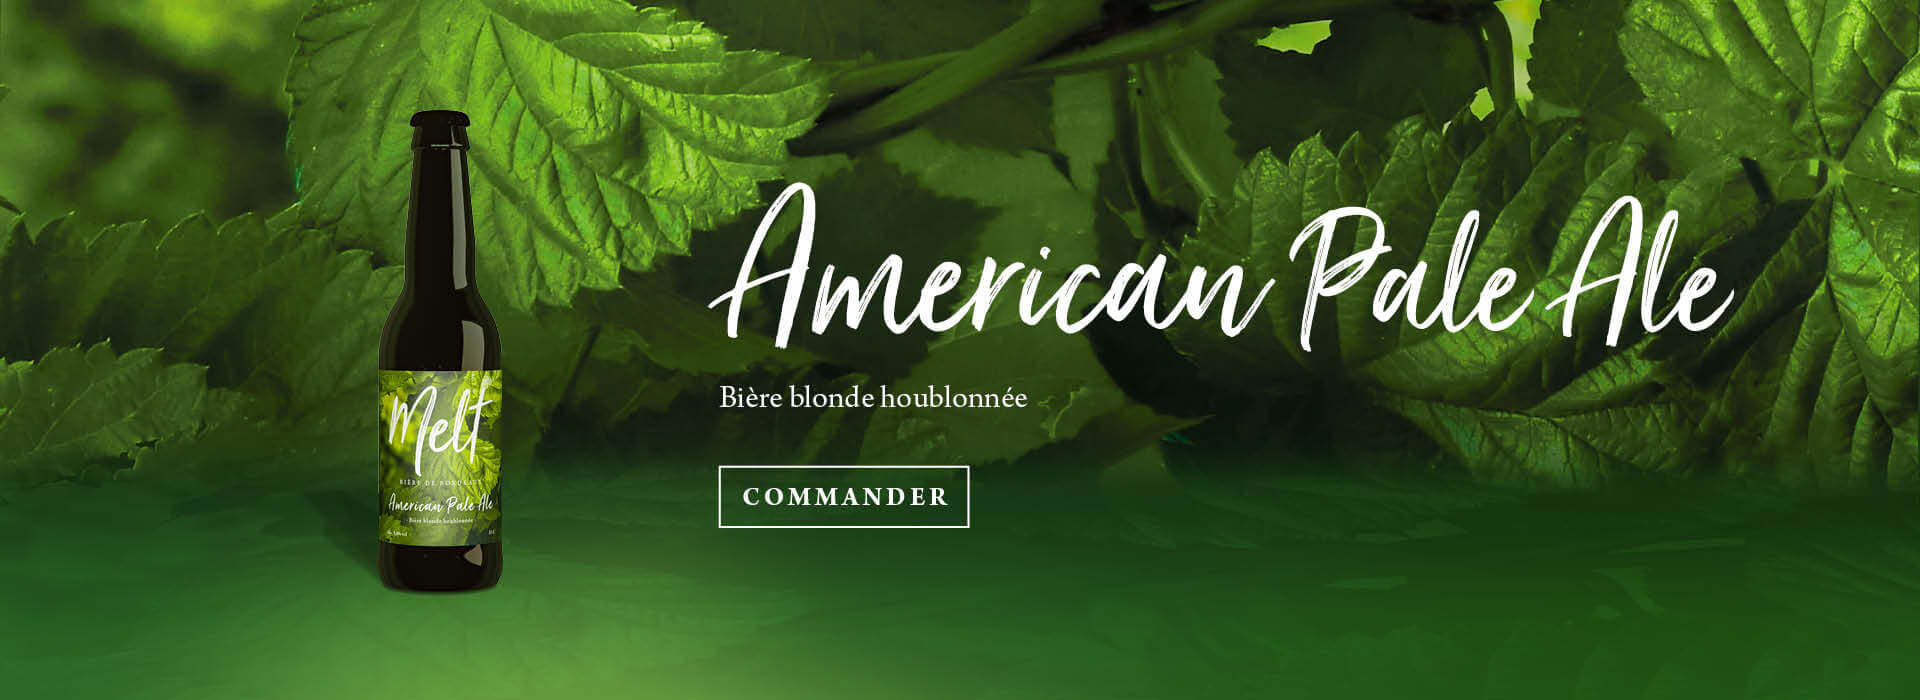 Commander l'American Pale Ale de la Brasserie Melt